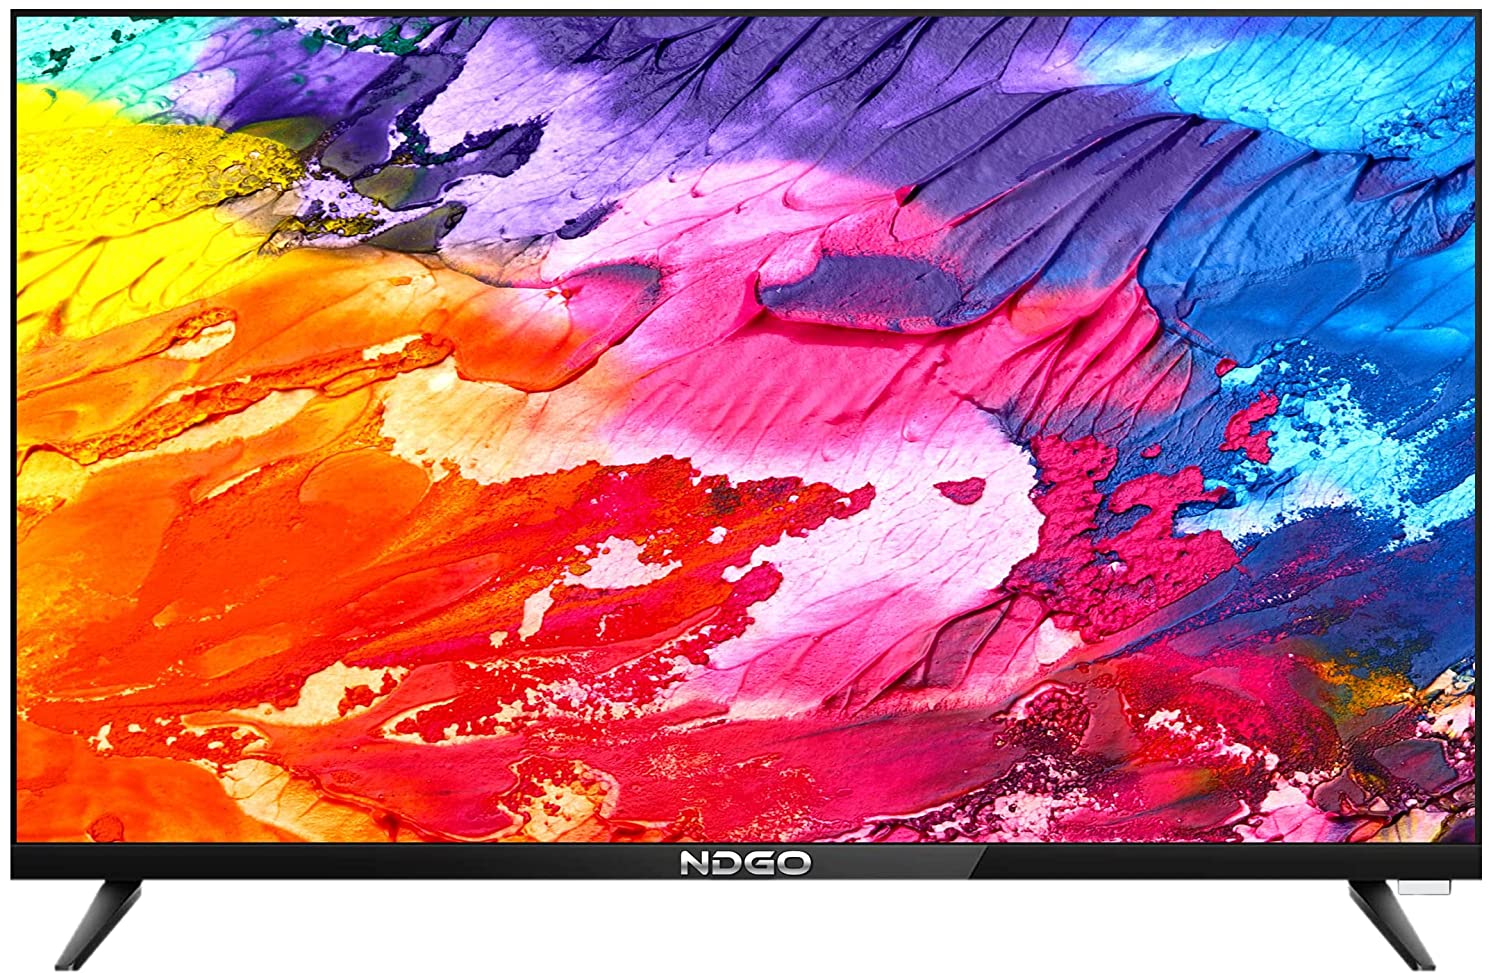 NDGO N-Series 80 cm (32 inches) Full HD LED TV (Frameless) (2022, N-32FL, Black)